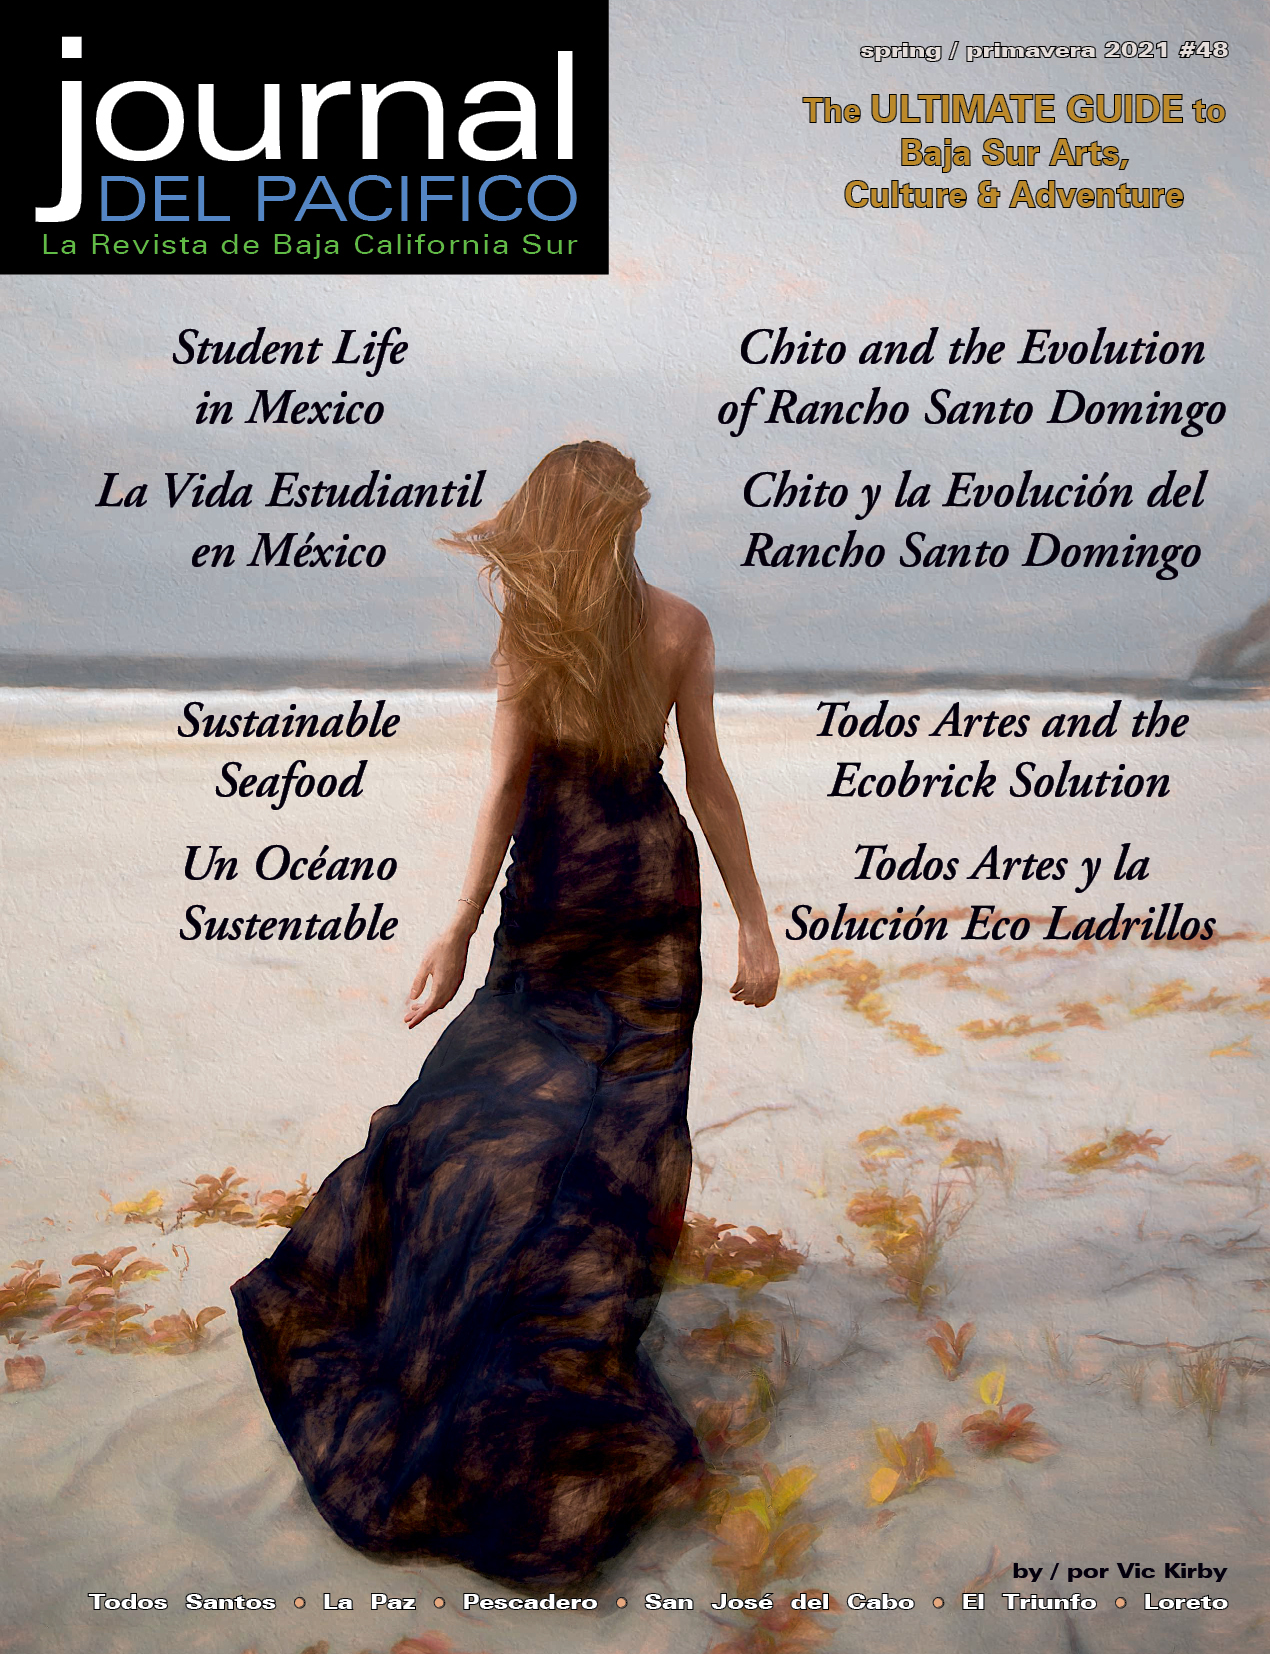 Spring/Primavera 2021 Issue of Journal del Pacifico